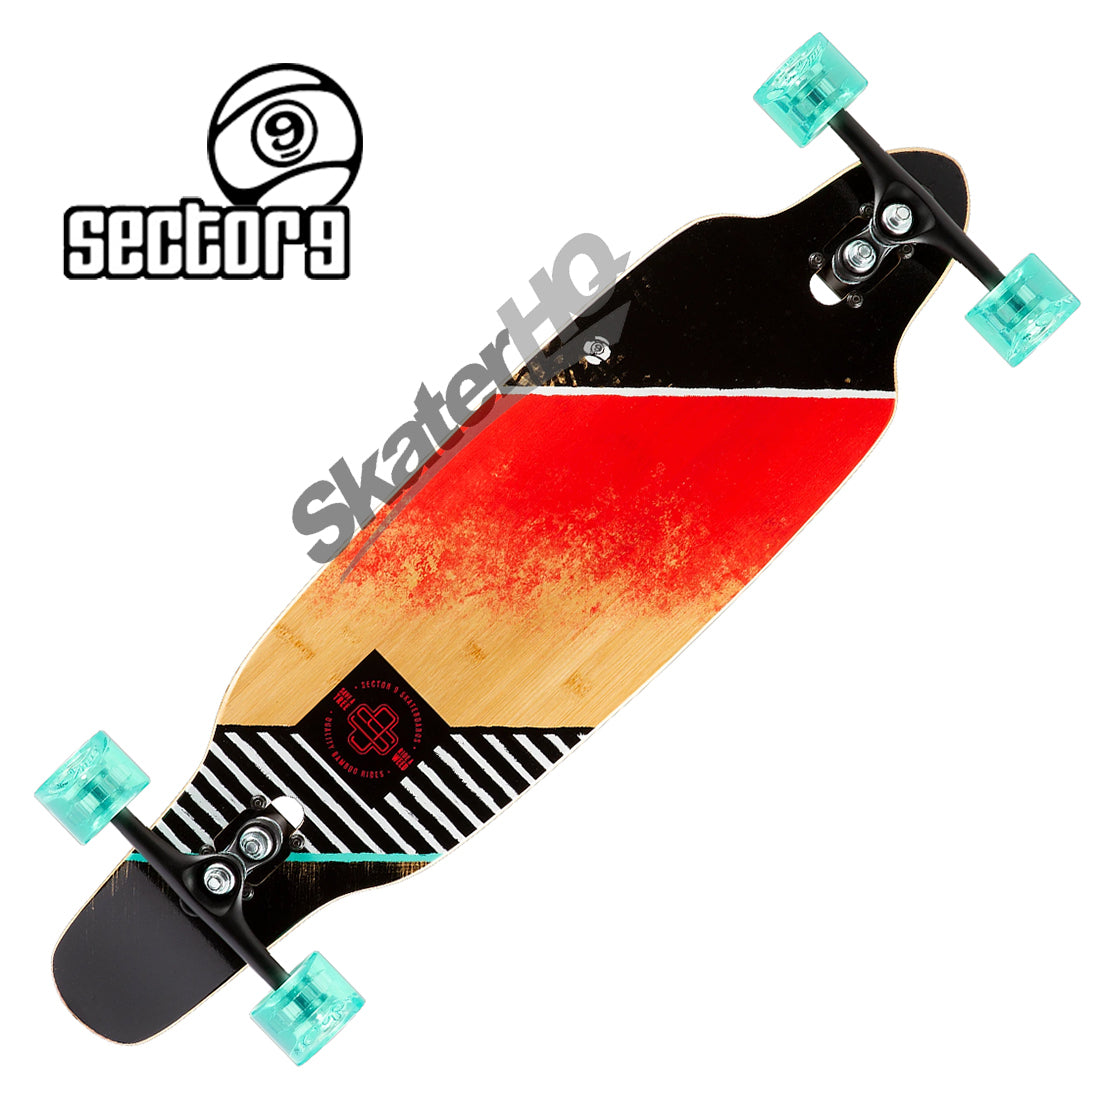 Sector 9 Striker Streak 36.5 Complete - Bamboo/Green Skateboard Completes Longboards